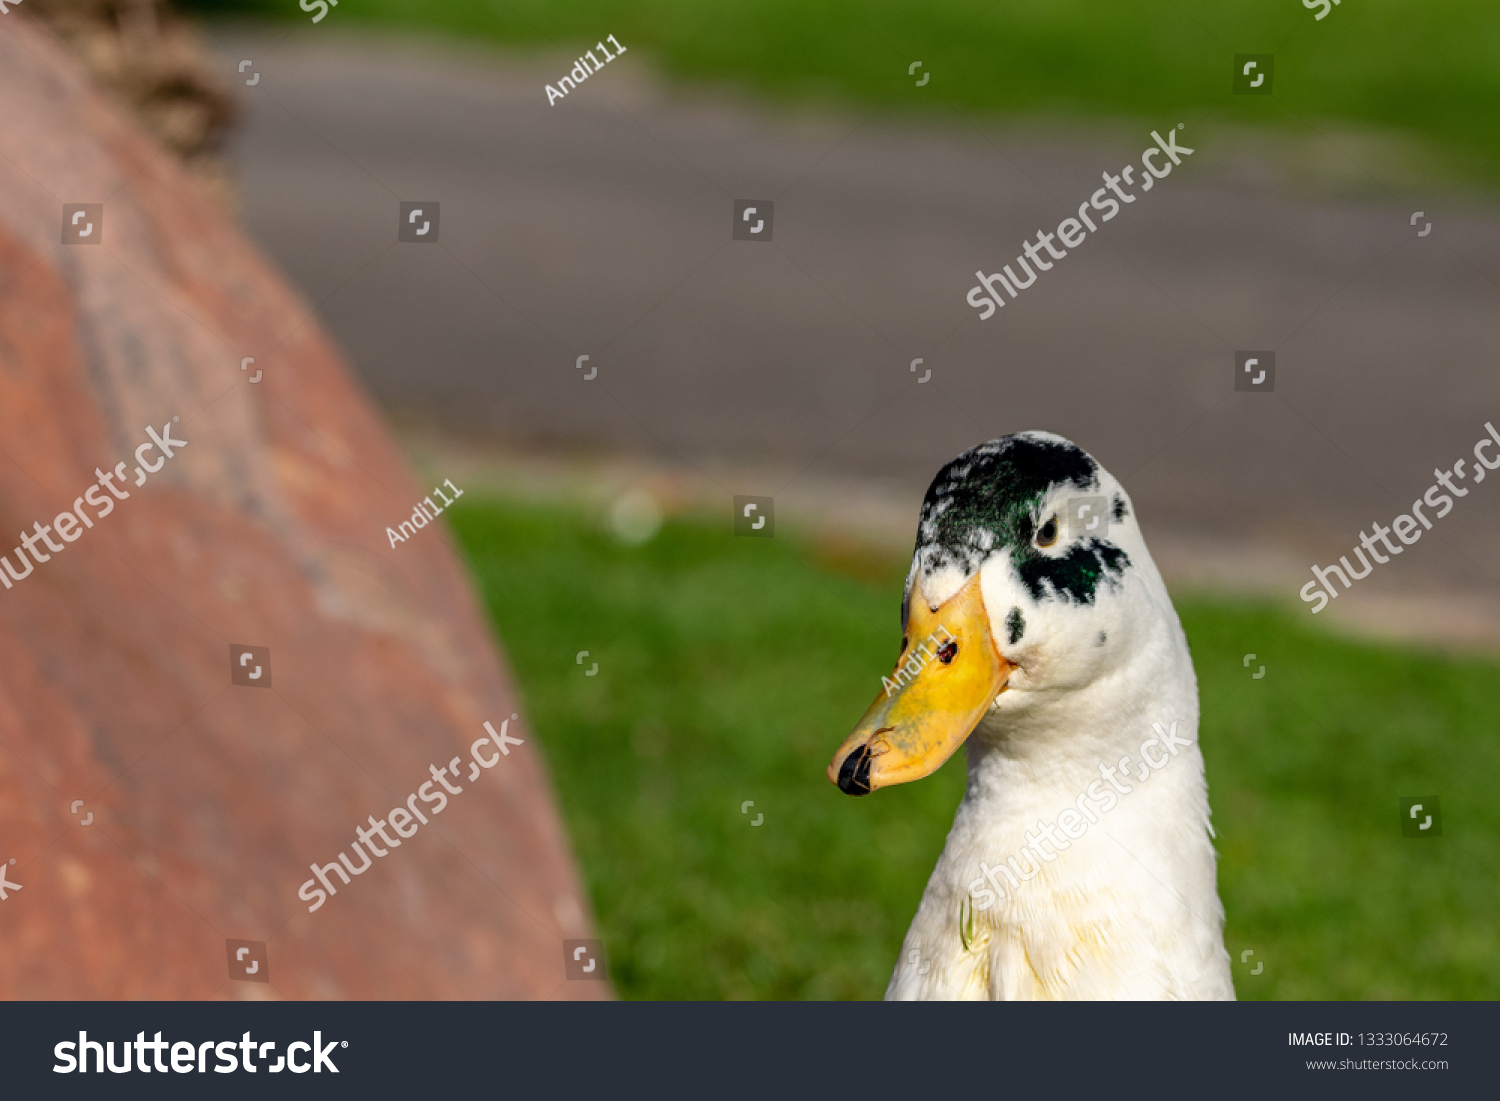 Close up portrait of colorful duck head #1333064672